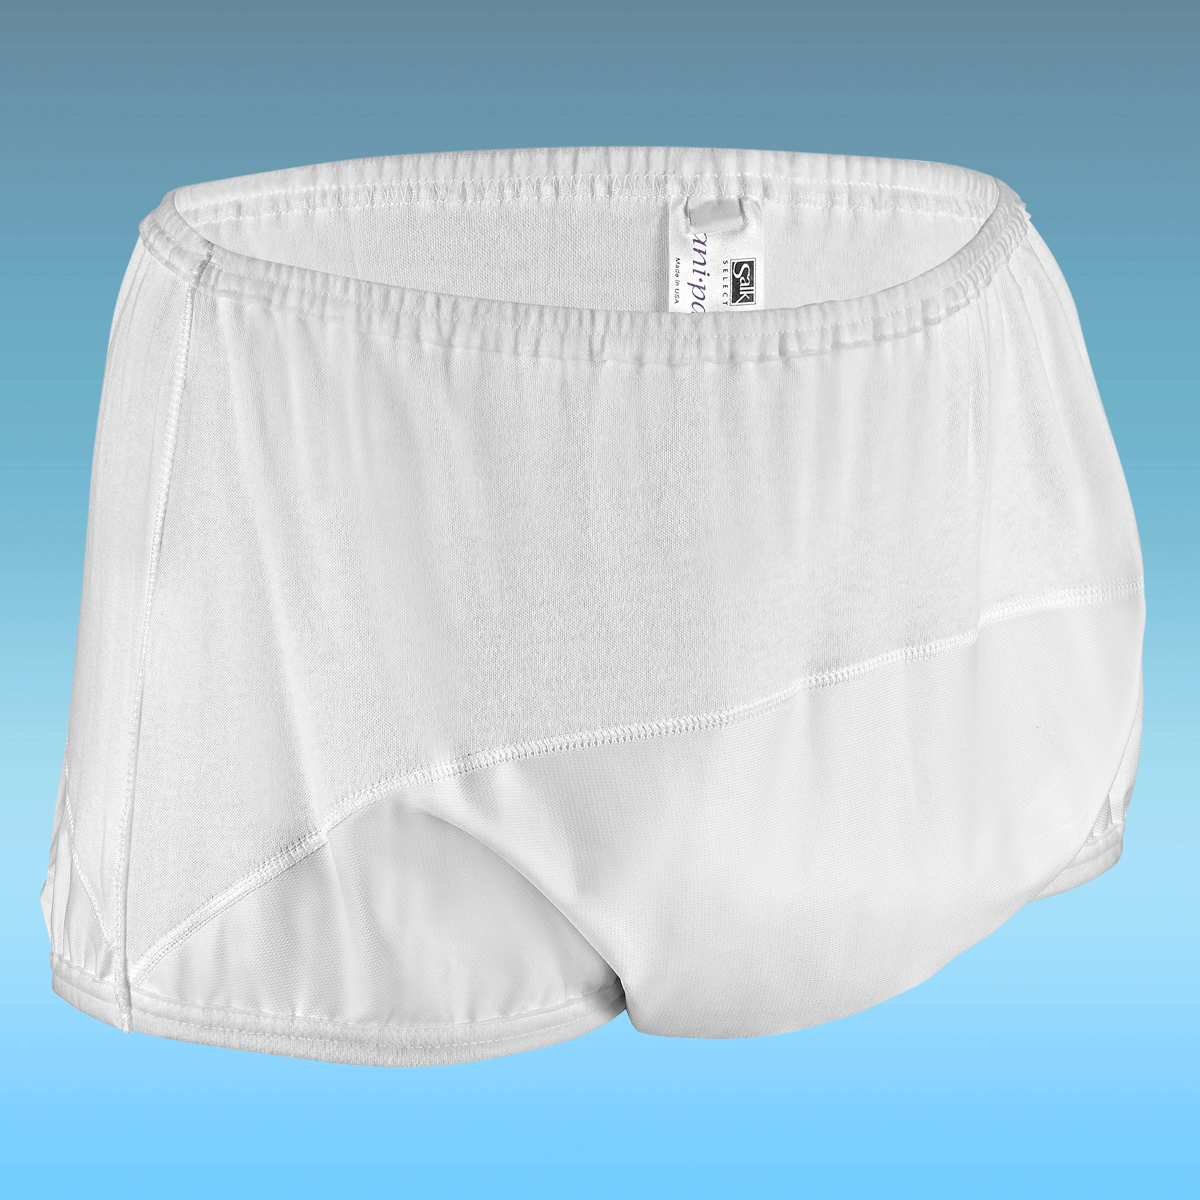 adult waterproof plastic pants small new custom designed see through